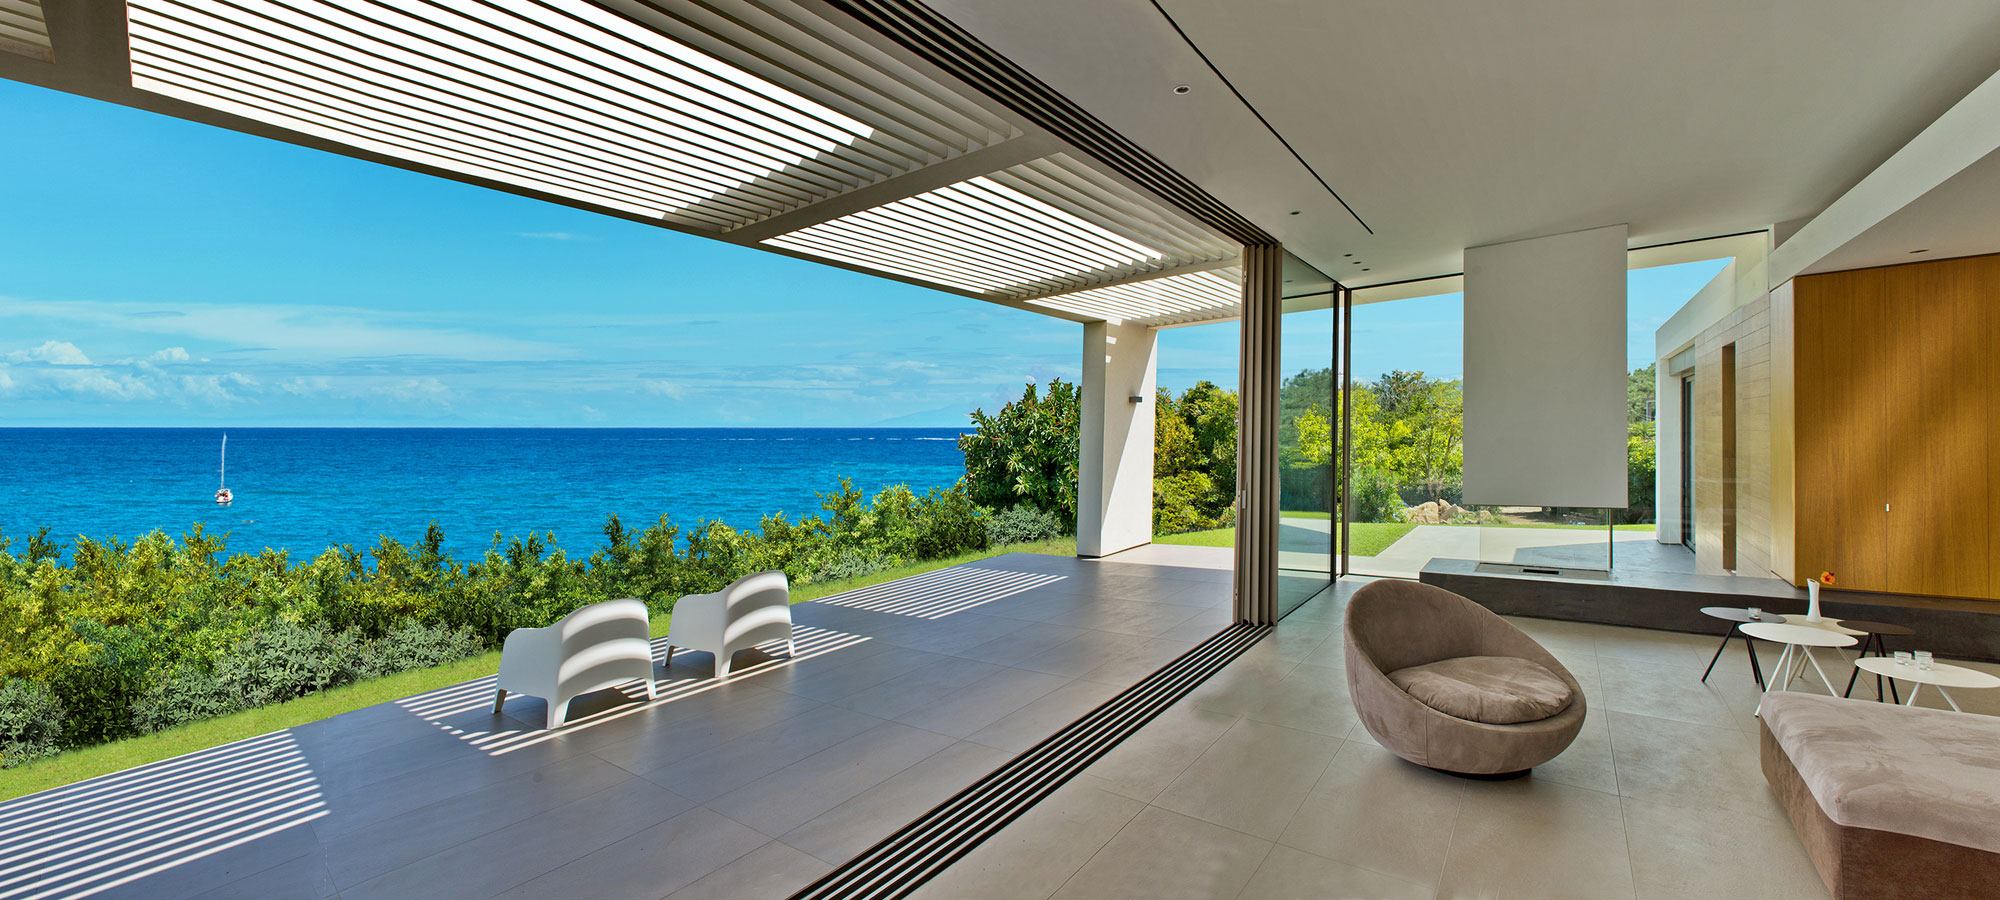 Lombok Architect - Stylish Modern Mediterranean Villa with Ocean View Picture 7